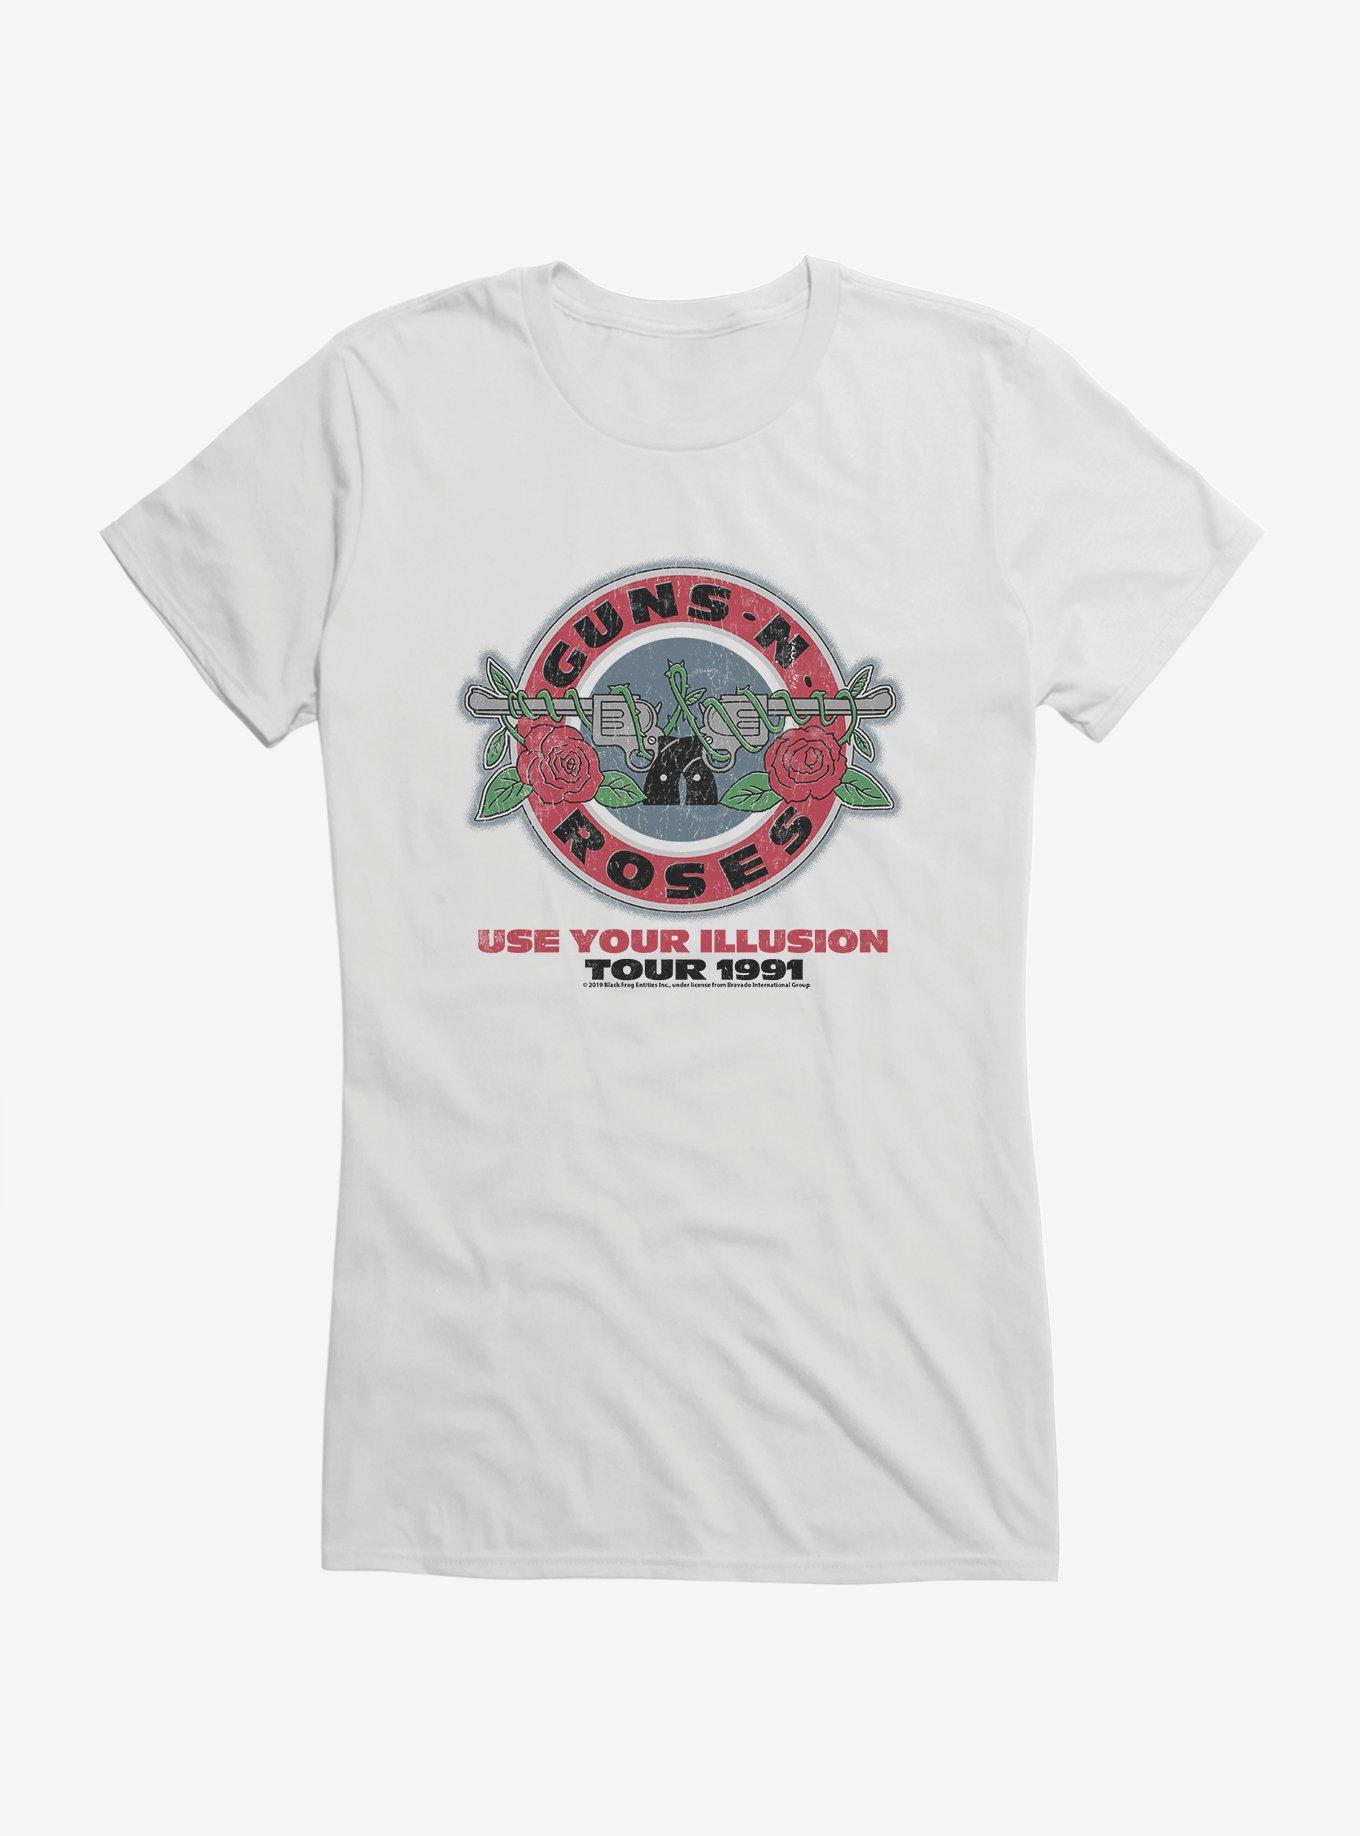 Guns N' Roses Use Your Illusion Tour 1991 Girls T-Shirt, WHITE, hi-res